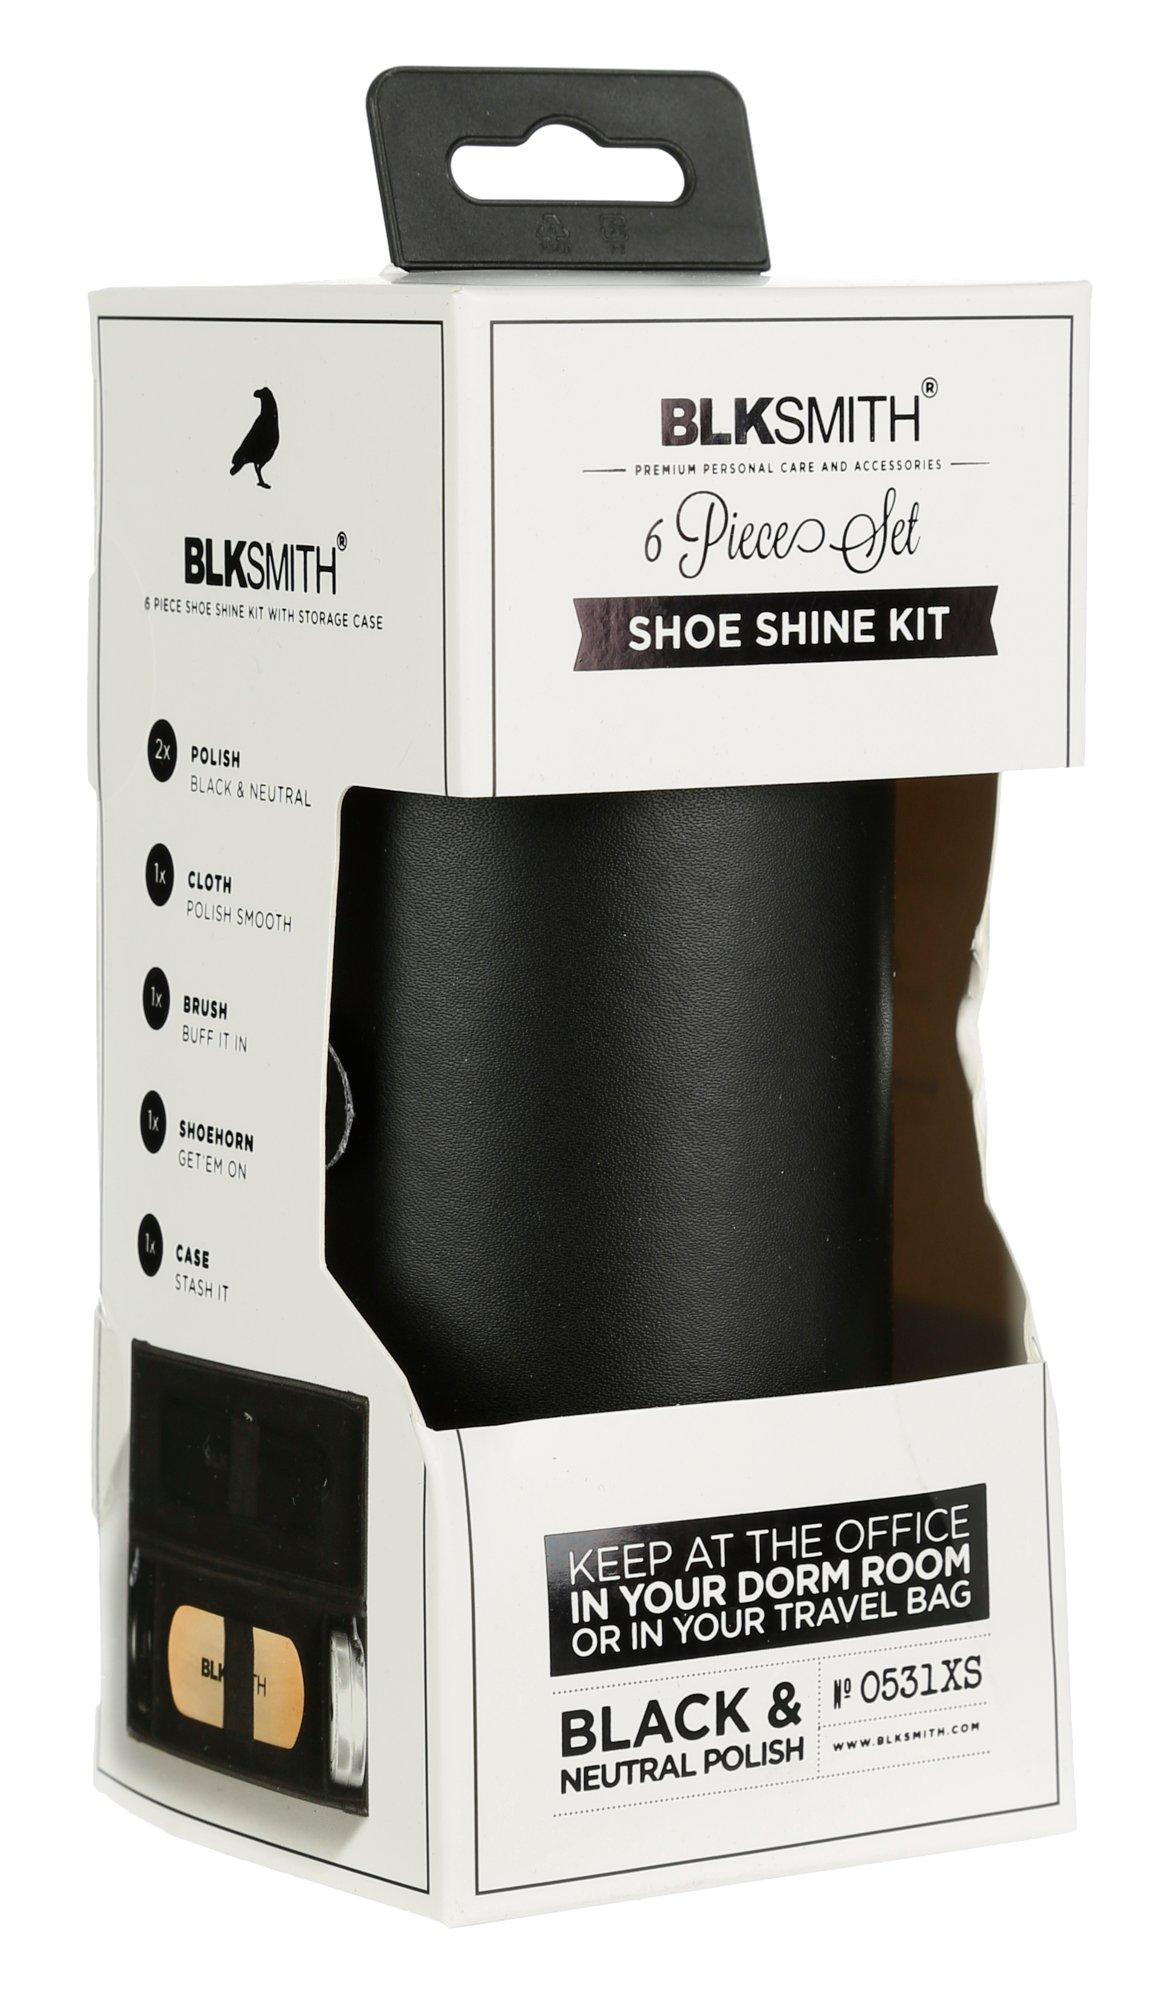 blksmith shoe shine kit